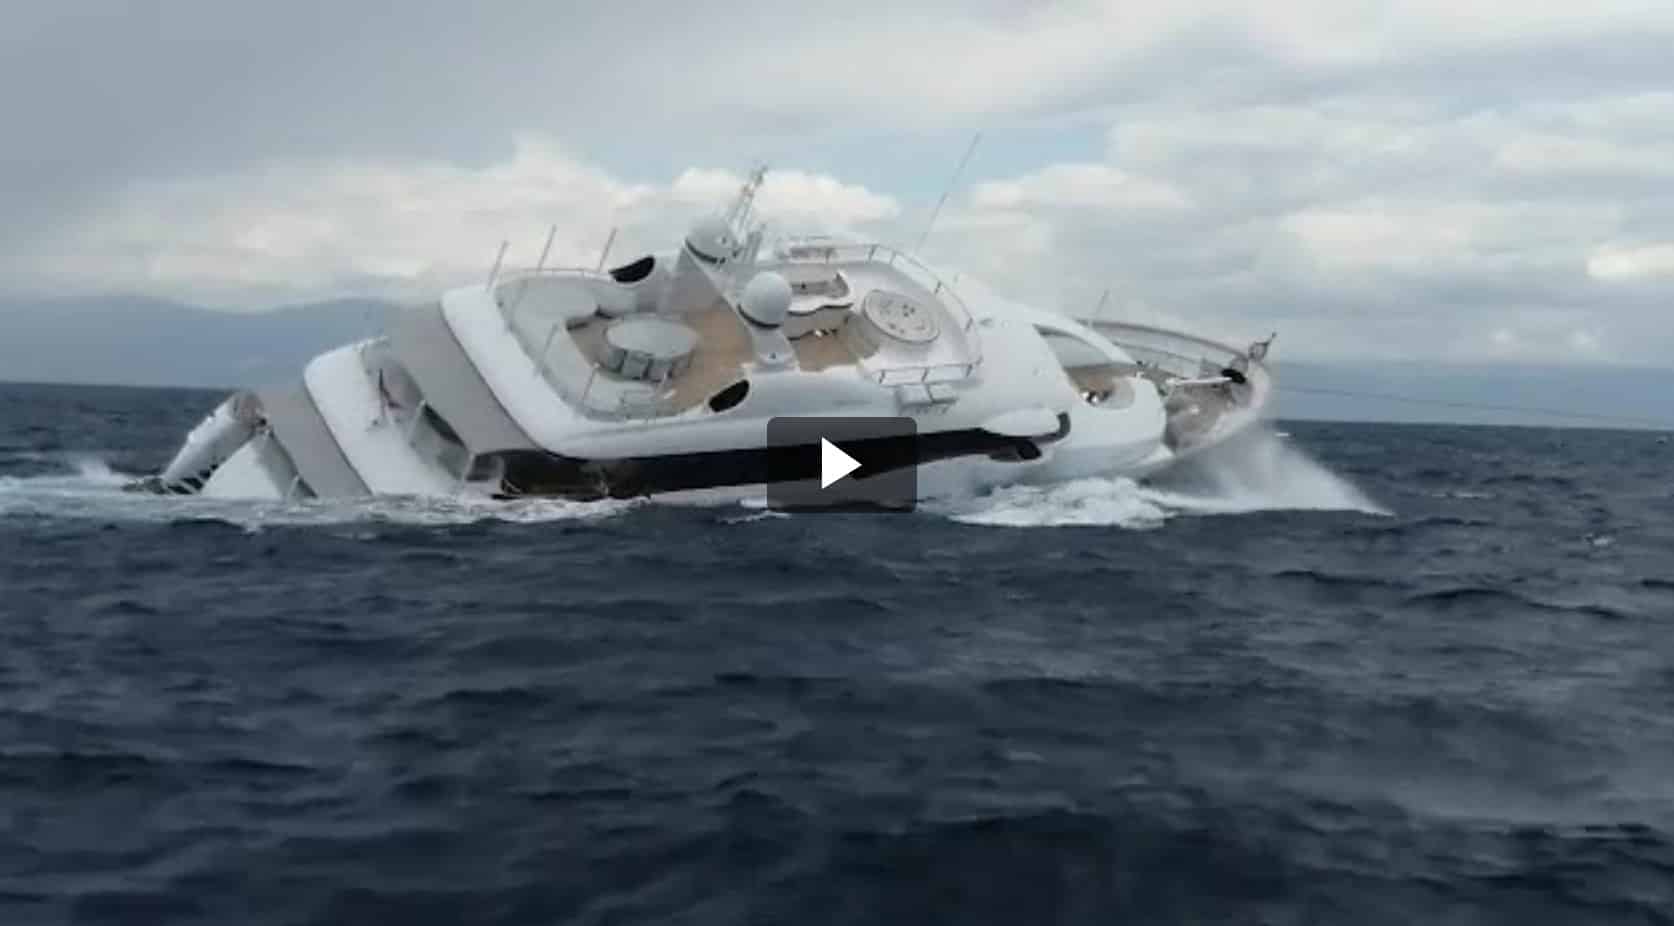 superyacht sinks off italy